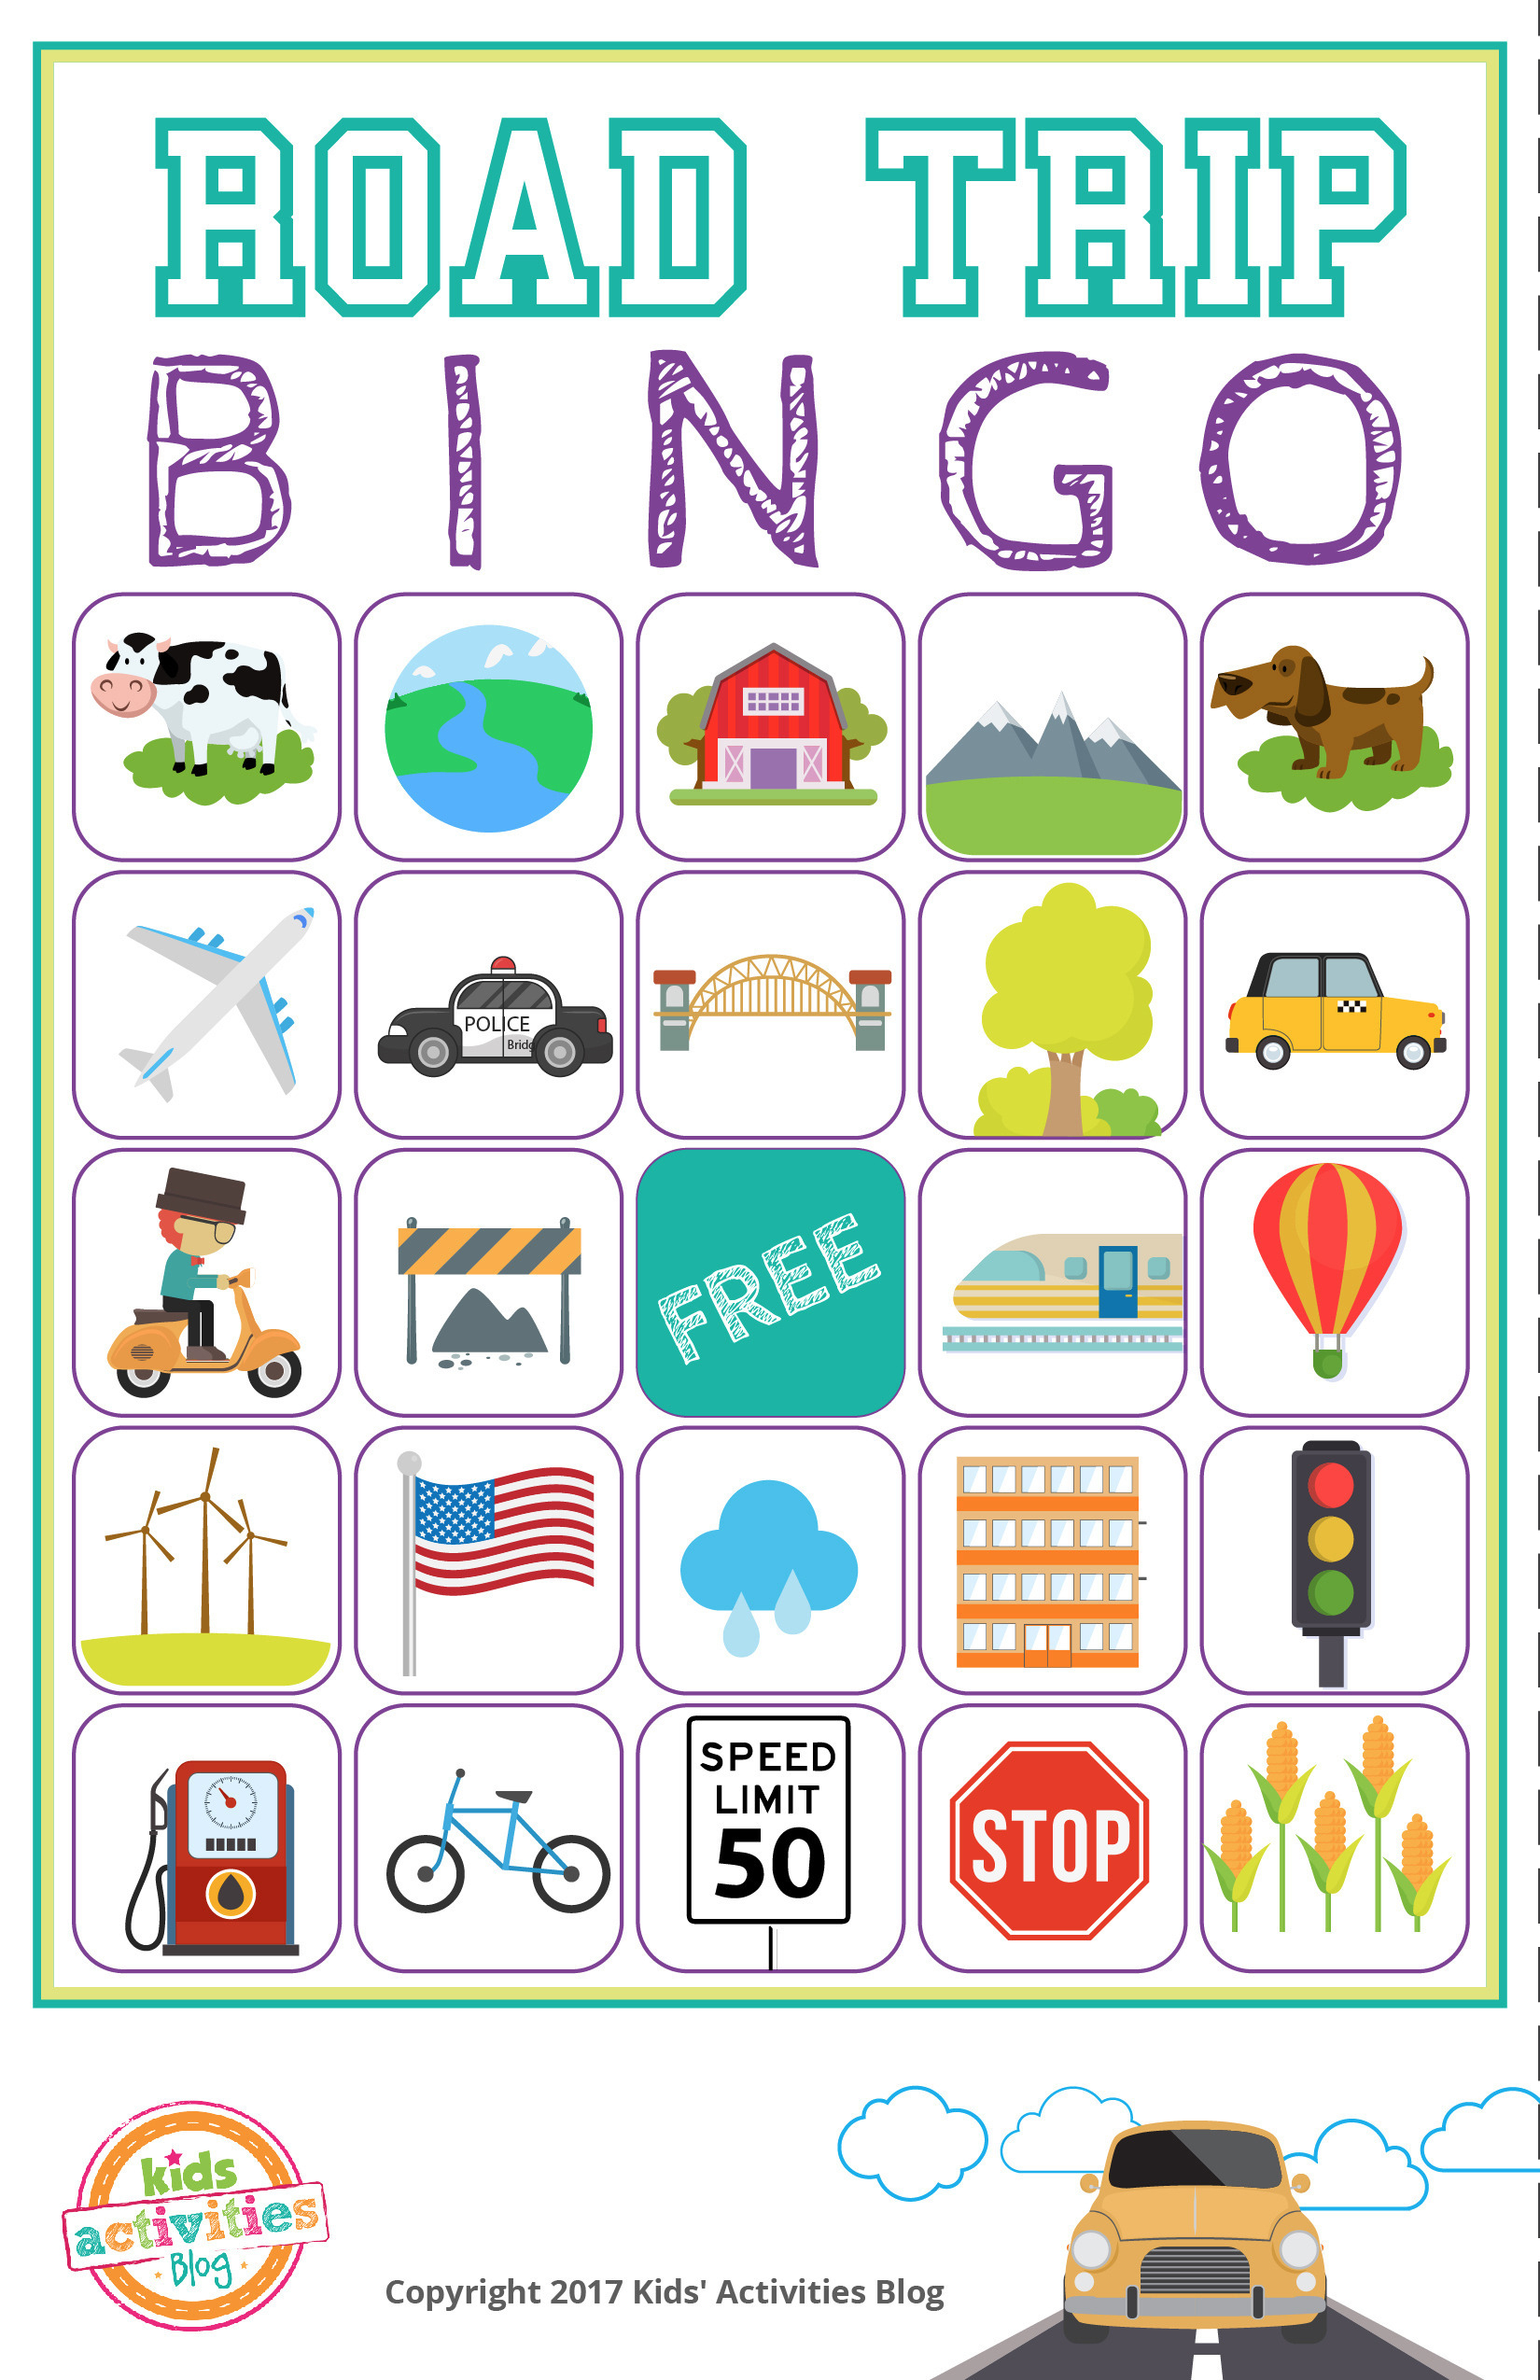 Free Road Trip Bingo Game For Kids Homemaking Expert 